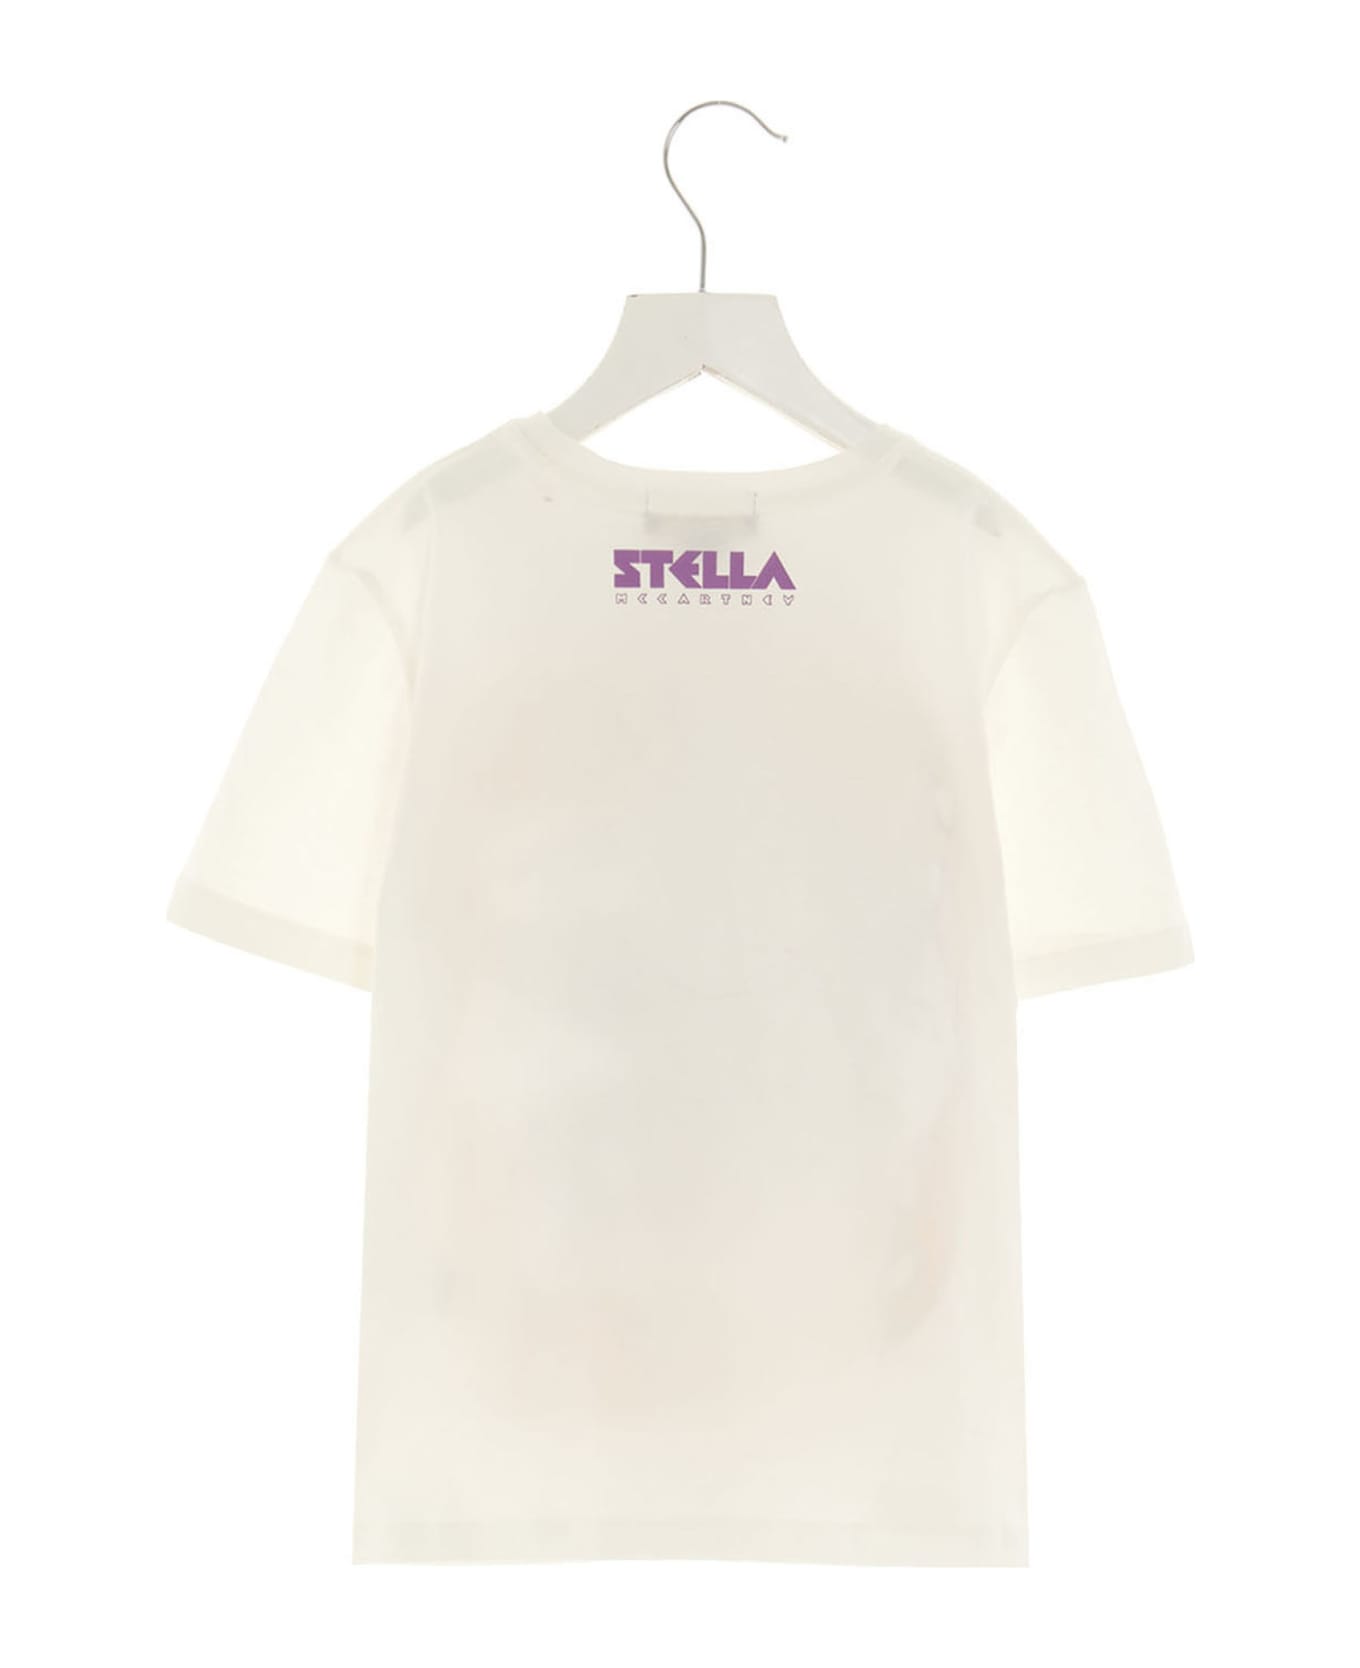 Stella McCartney Kids X Disney T-shirt - White